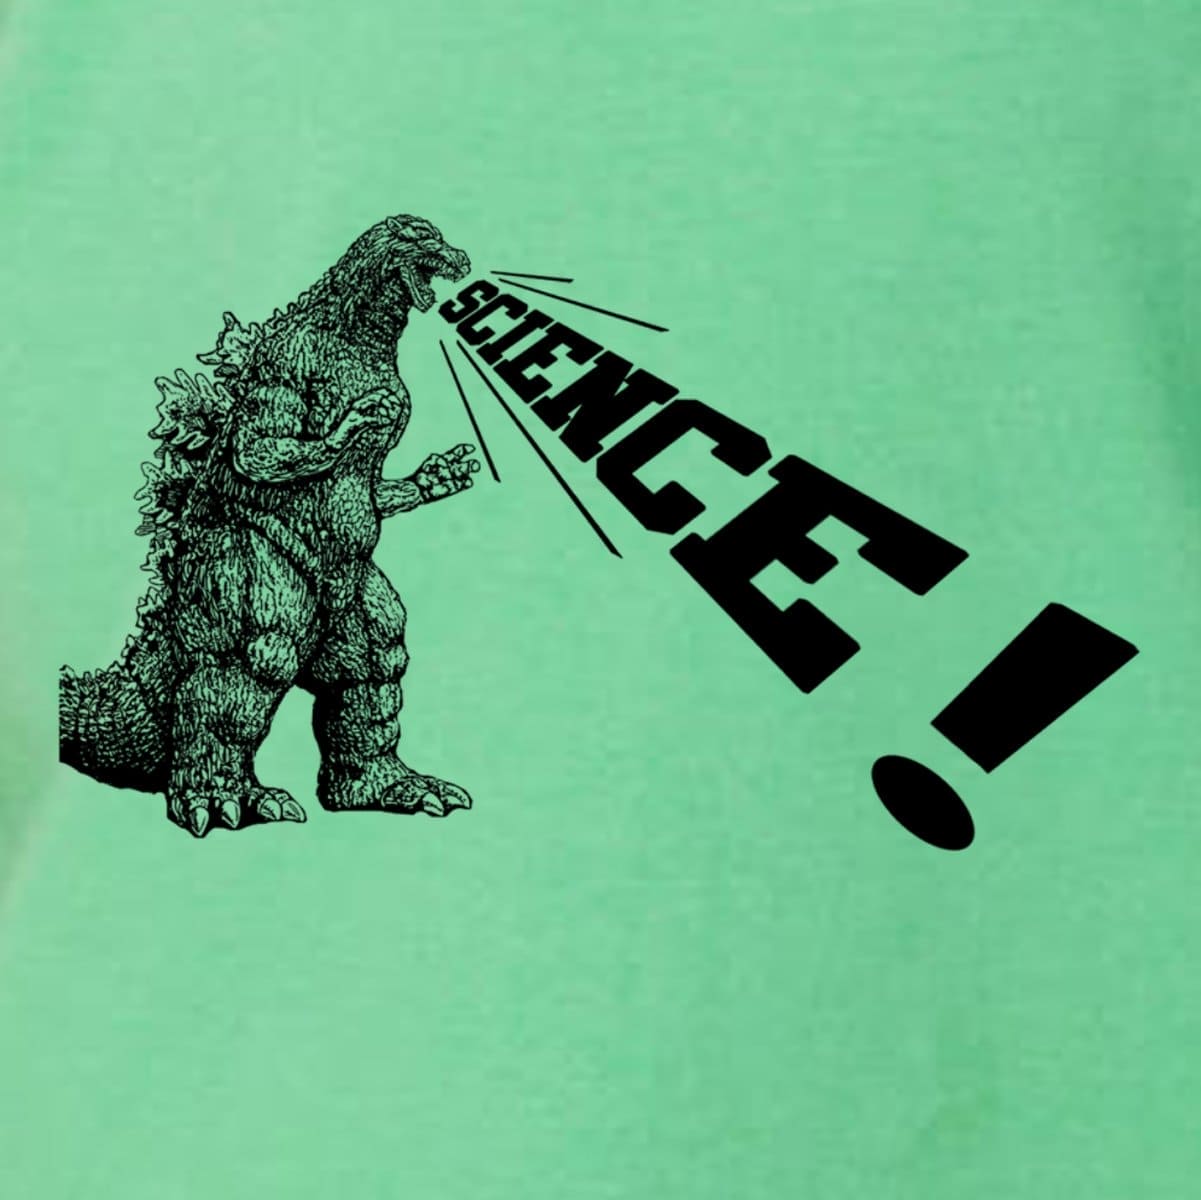 Godzilla's Scientific Roar: Kids' T-Shirt for Young Explorers - The Little Big Store